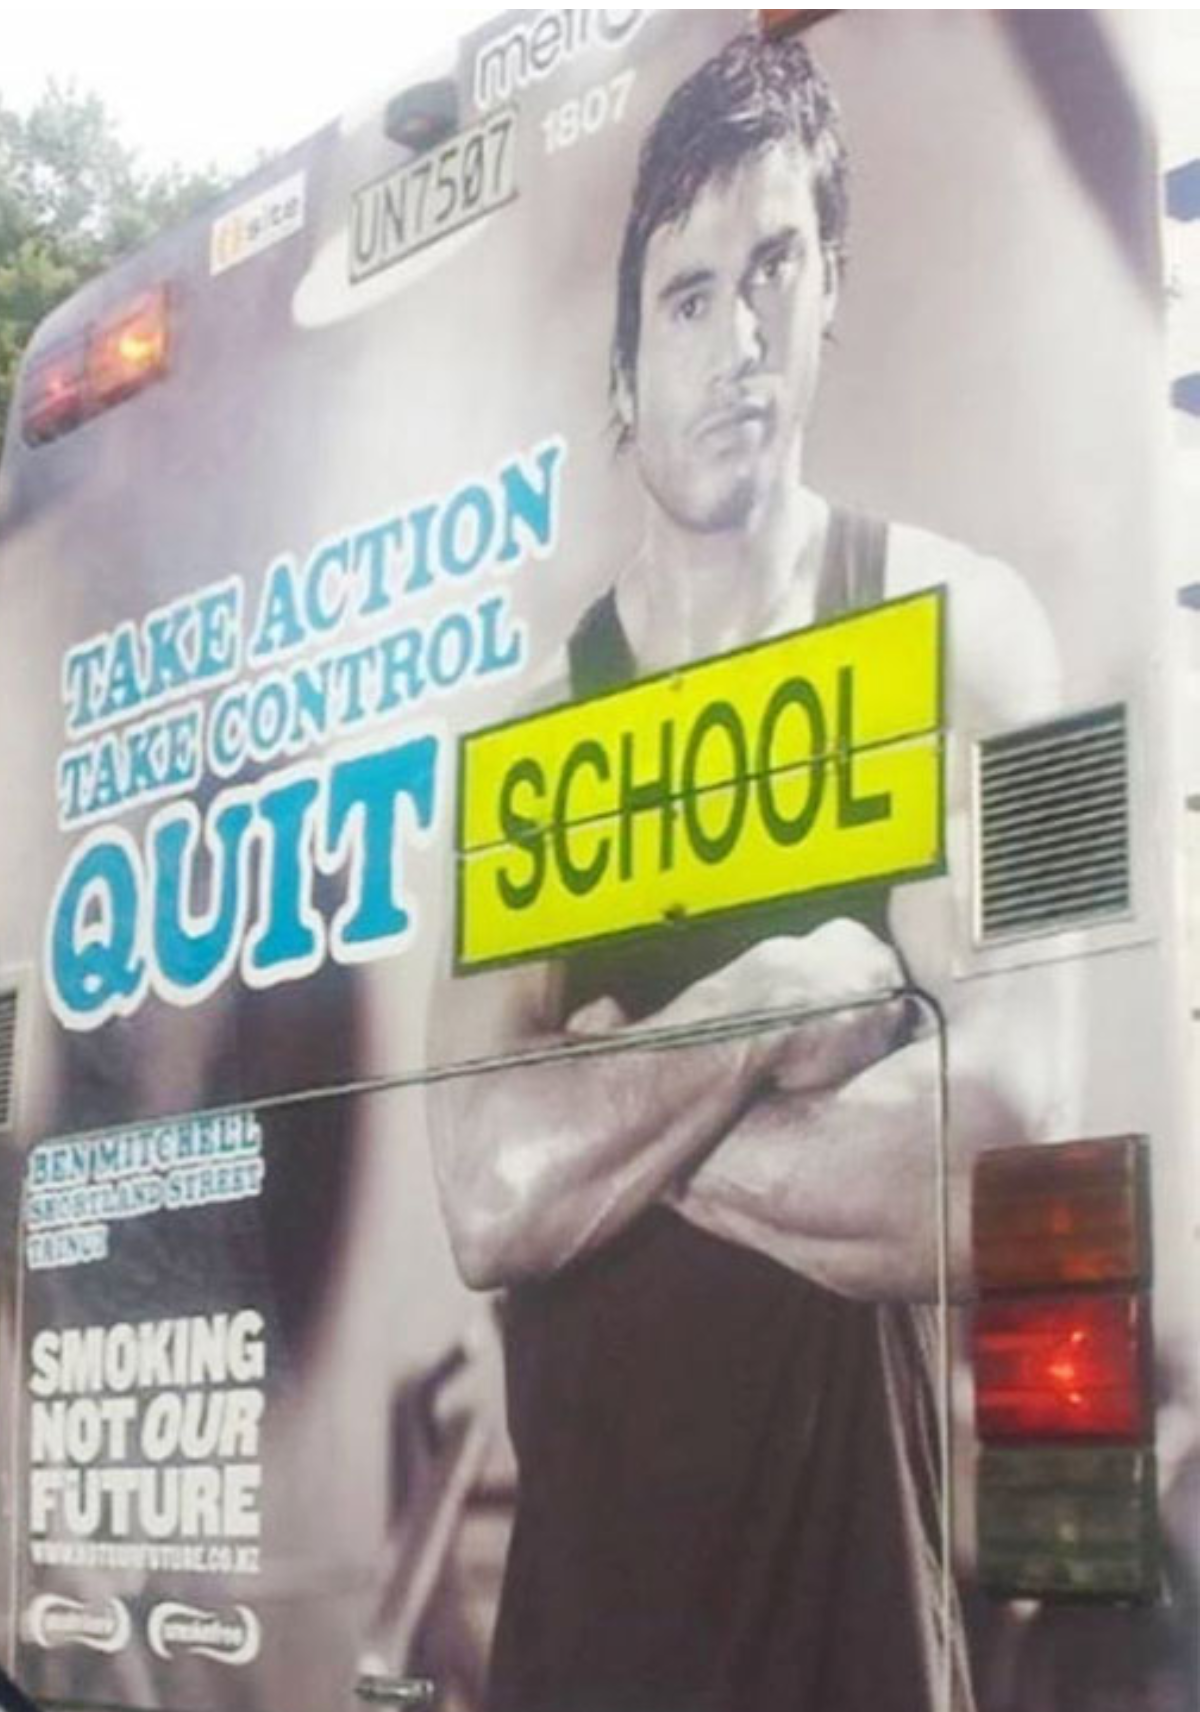 school bus that looks like it says &quot;quit school&quot;